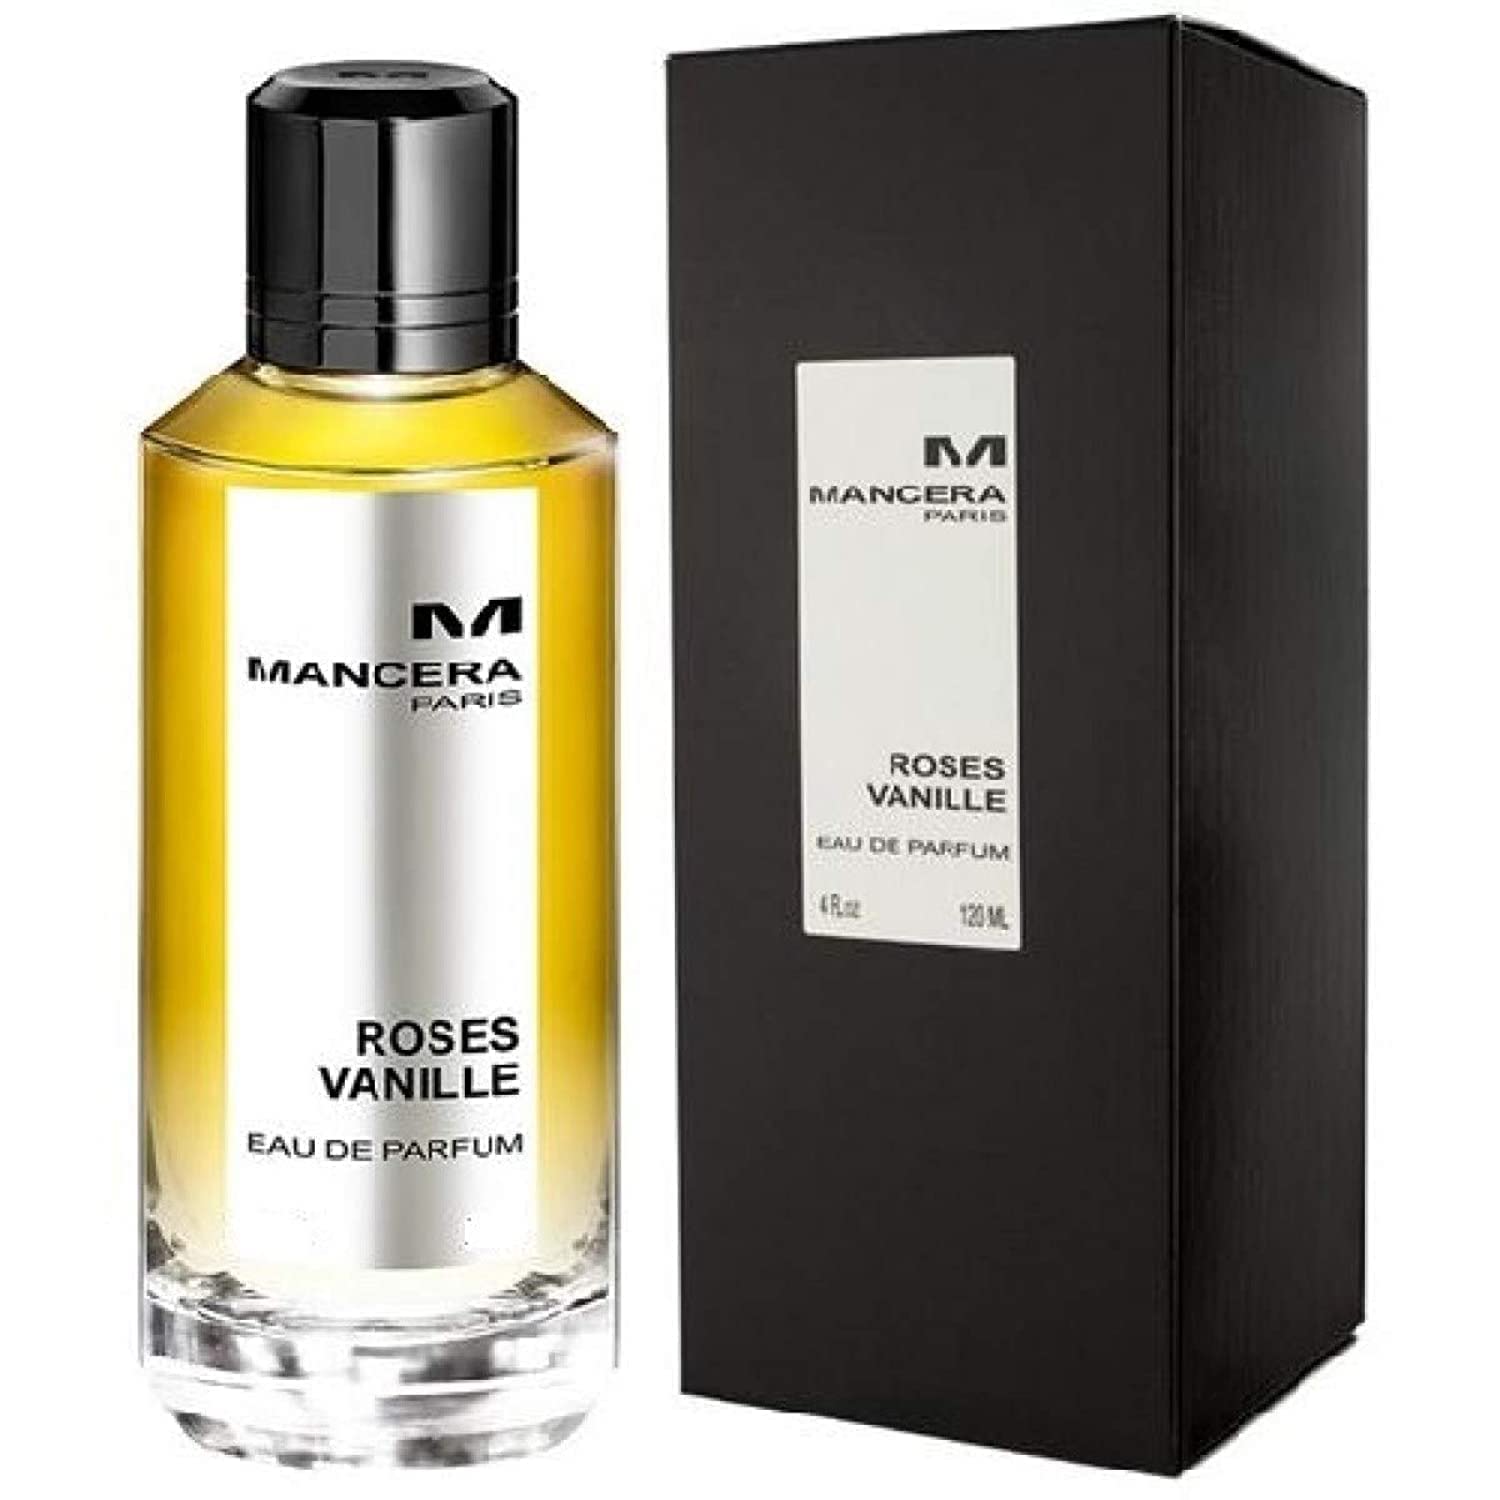 Mancera Roses Vanille EDP | My Perfume Shop Australia